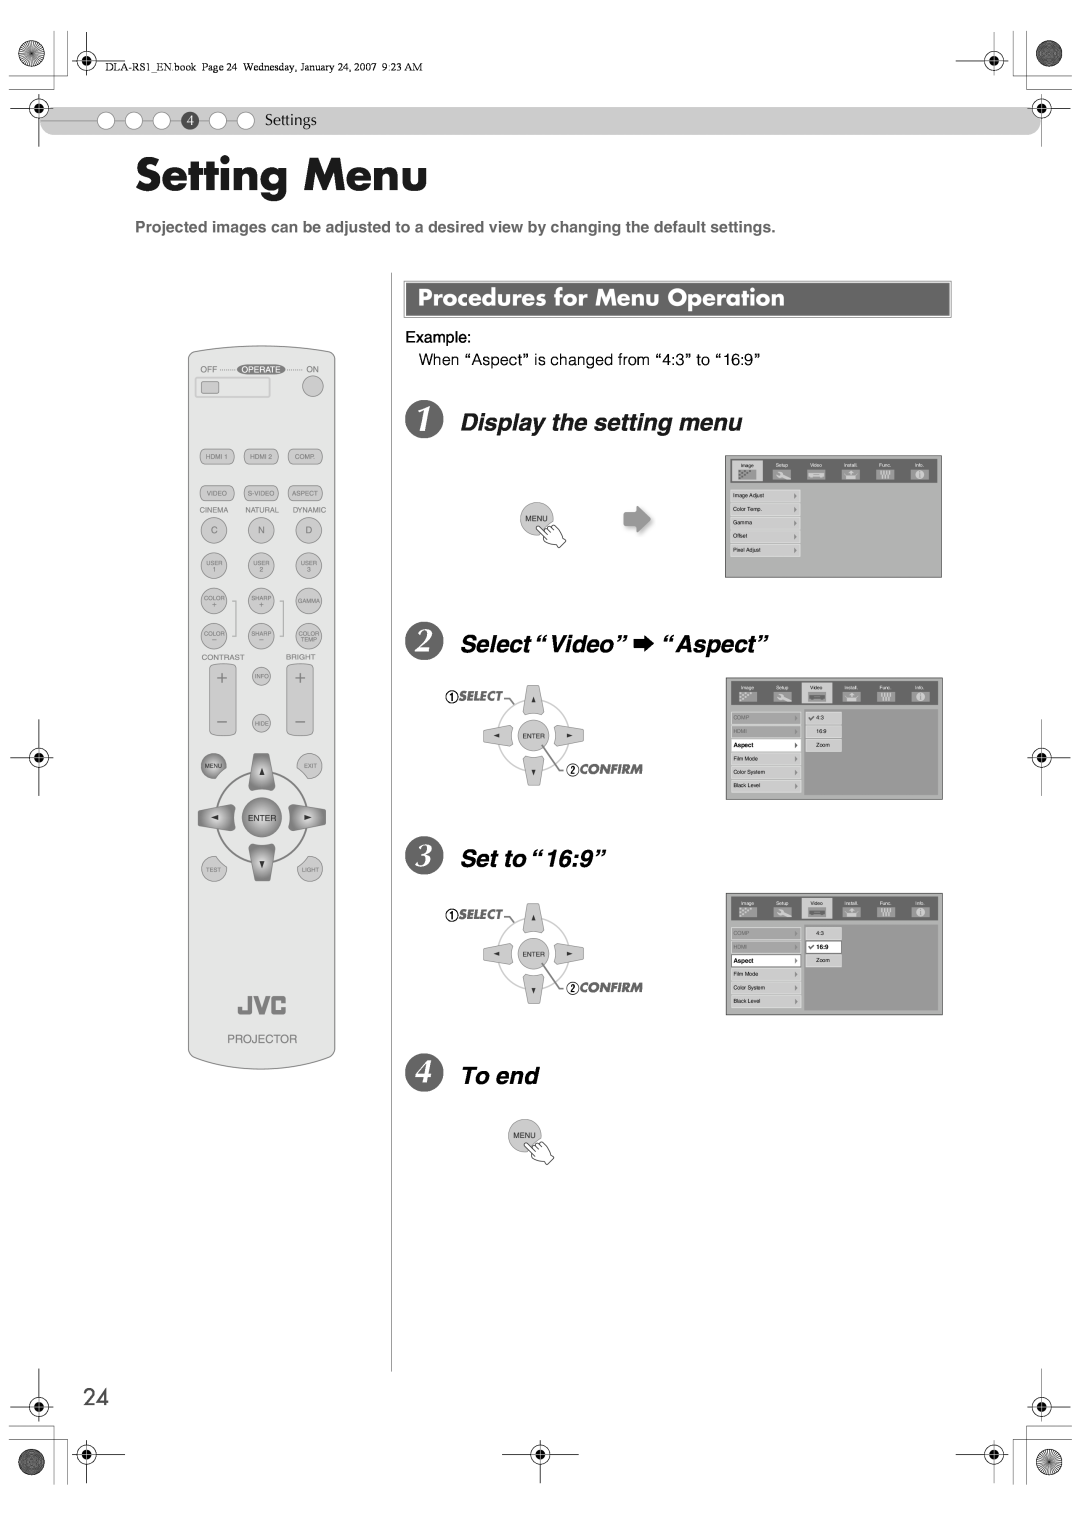 JVC DLA-RS1 Setting Menu, A Display the setting menu, B Select “Video” g “Aspect”, C Set to “169”, D To end, Settings 